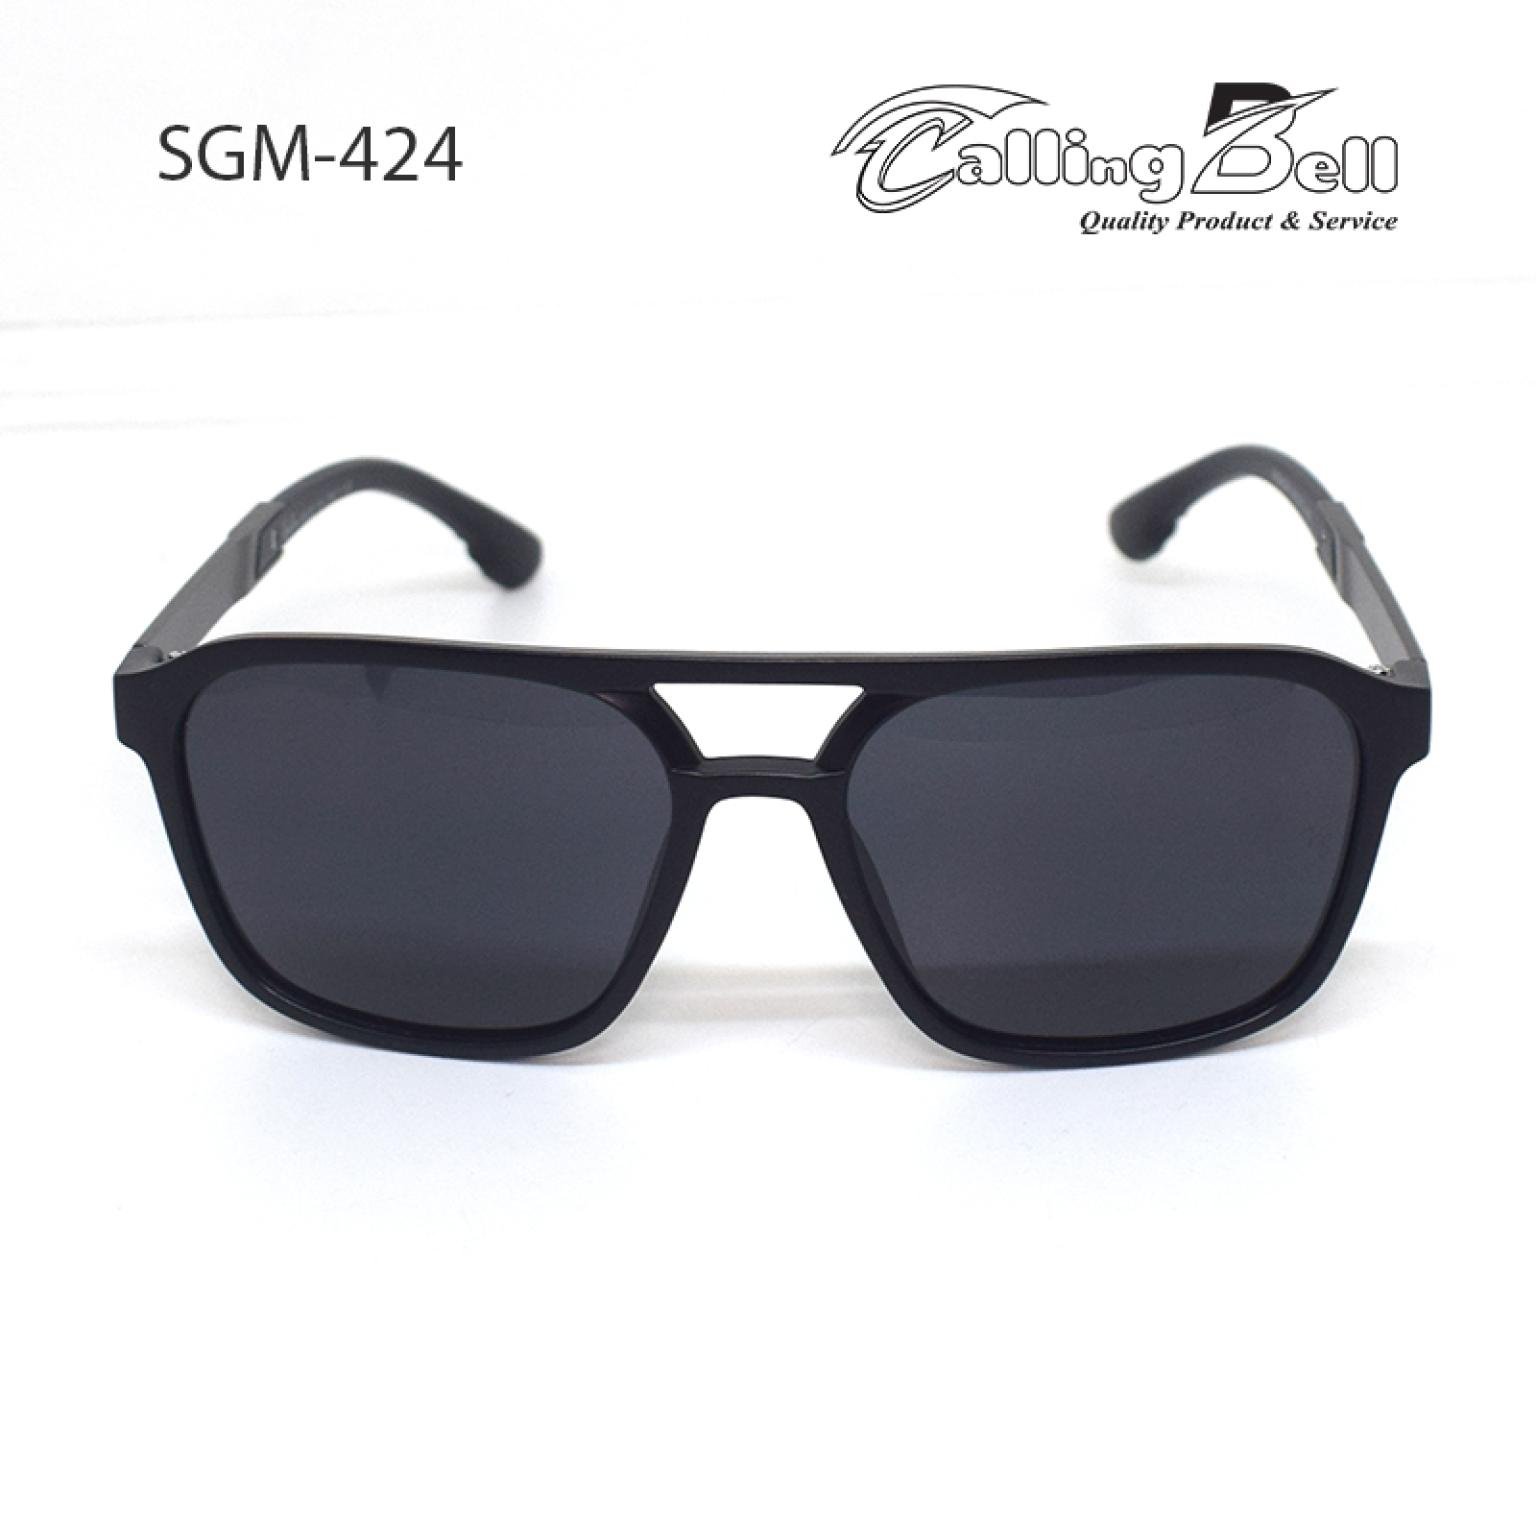 Double Bridge Side Metal Polarized Sunglasses For Men Driving Swimming